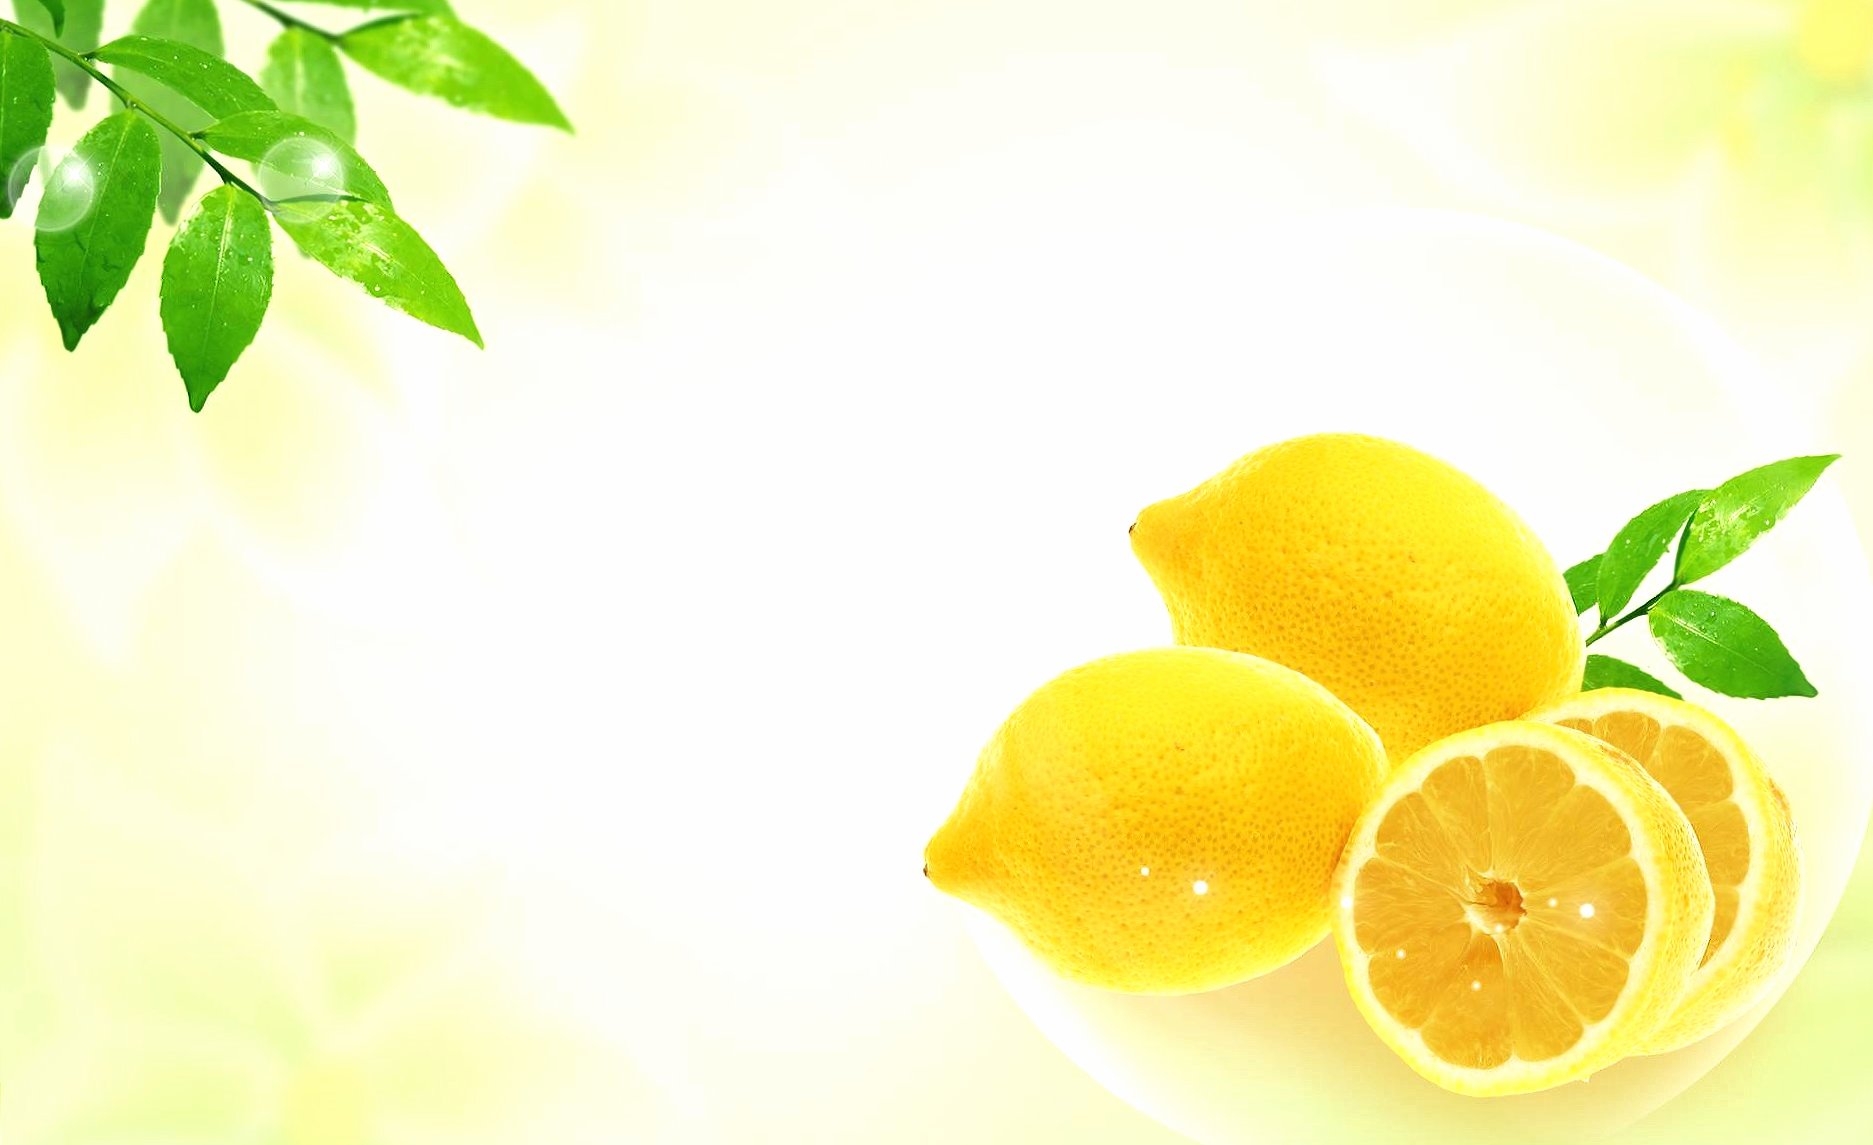 Lemons at 1024 x 1024 iPad size wallpapers HD quality